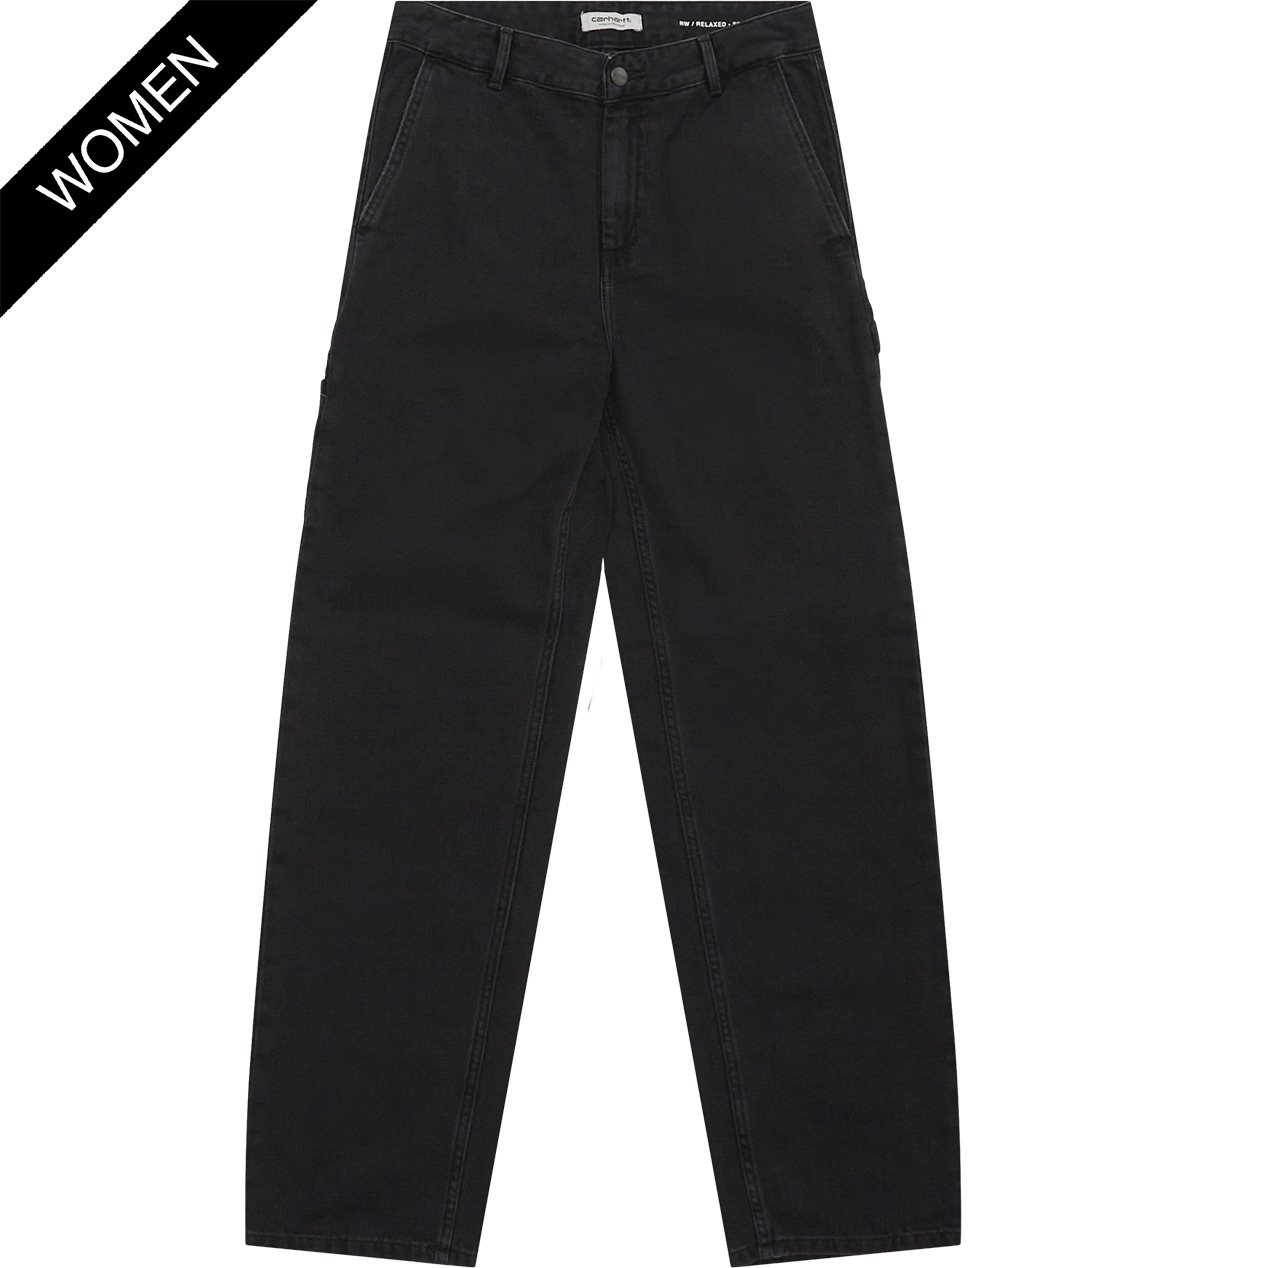 Carhartt WIP Women Jeans W PIERCE PANT STRAIGHT I031251.89.06 Svart